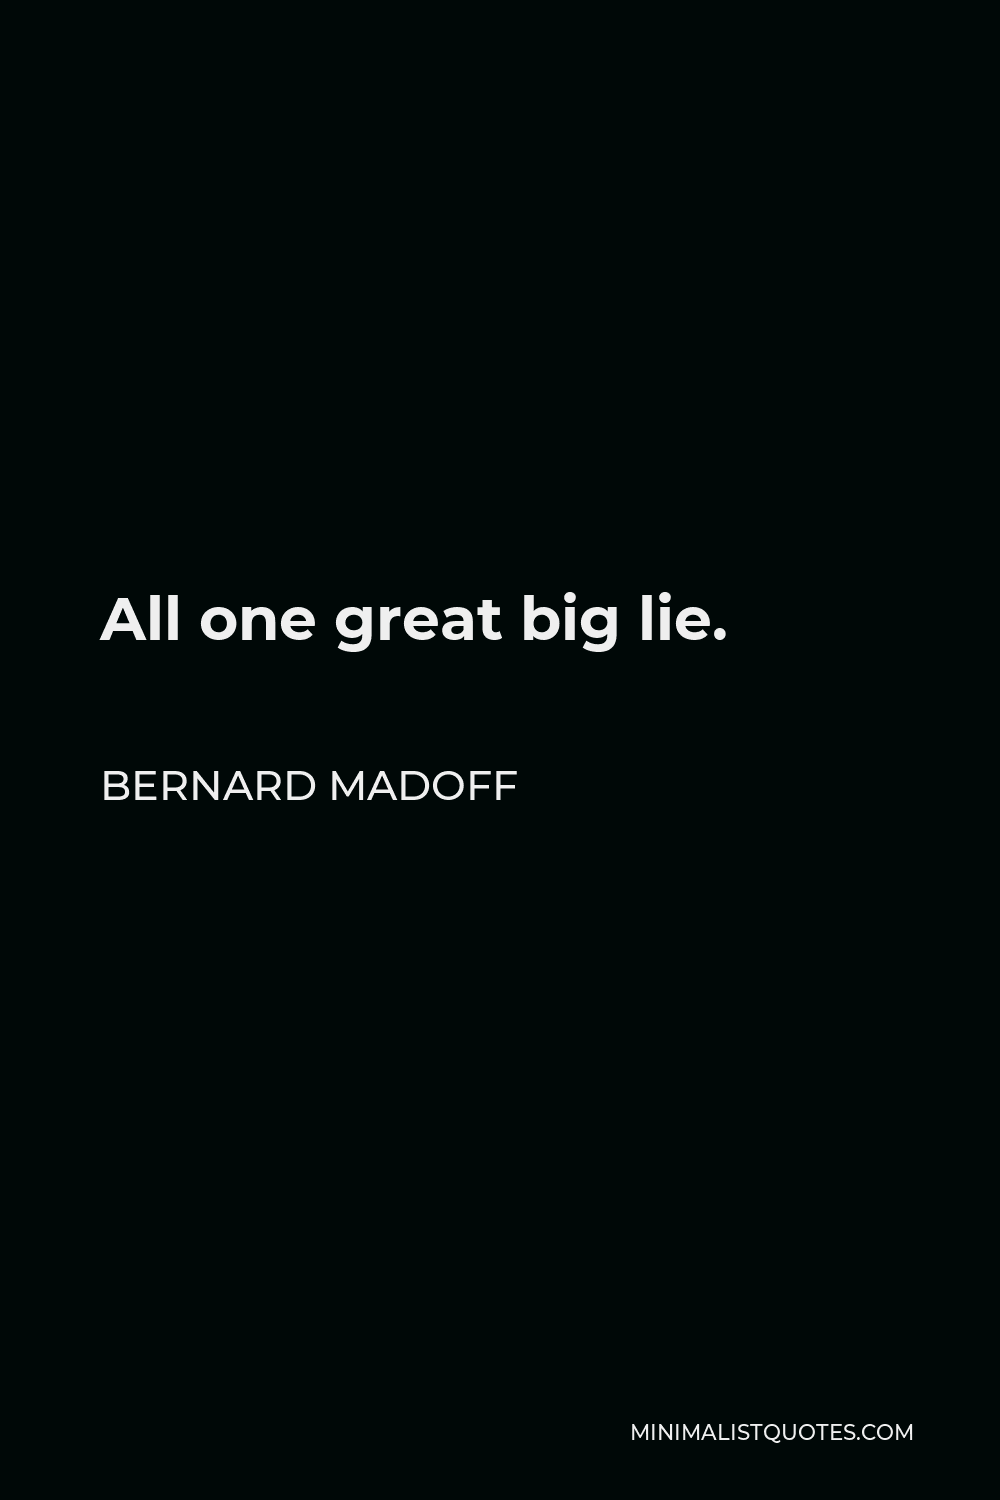 Bernard Madoff Quote - All one great big lie.